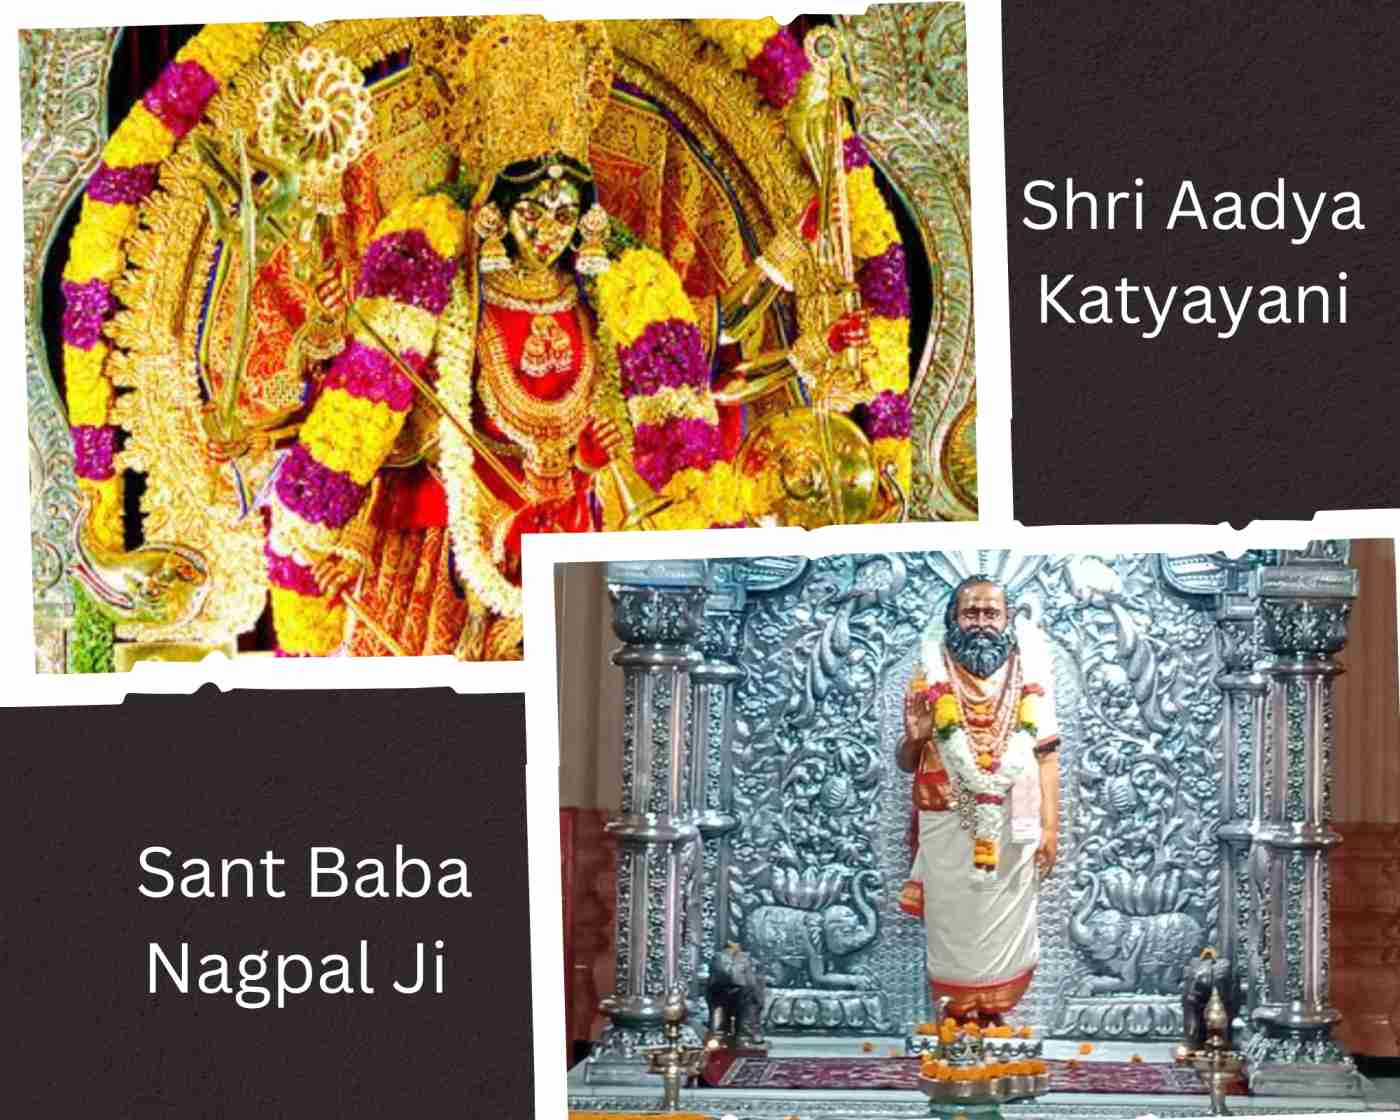 Shri Adhya Katyayani Shaktipeeth Mandir